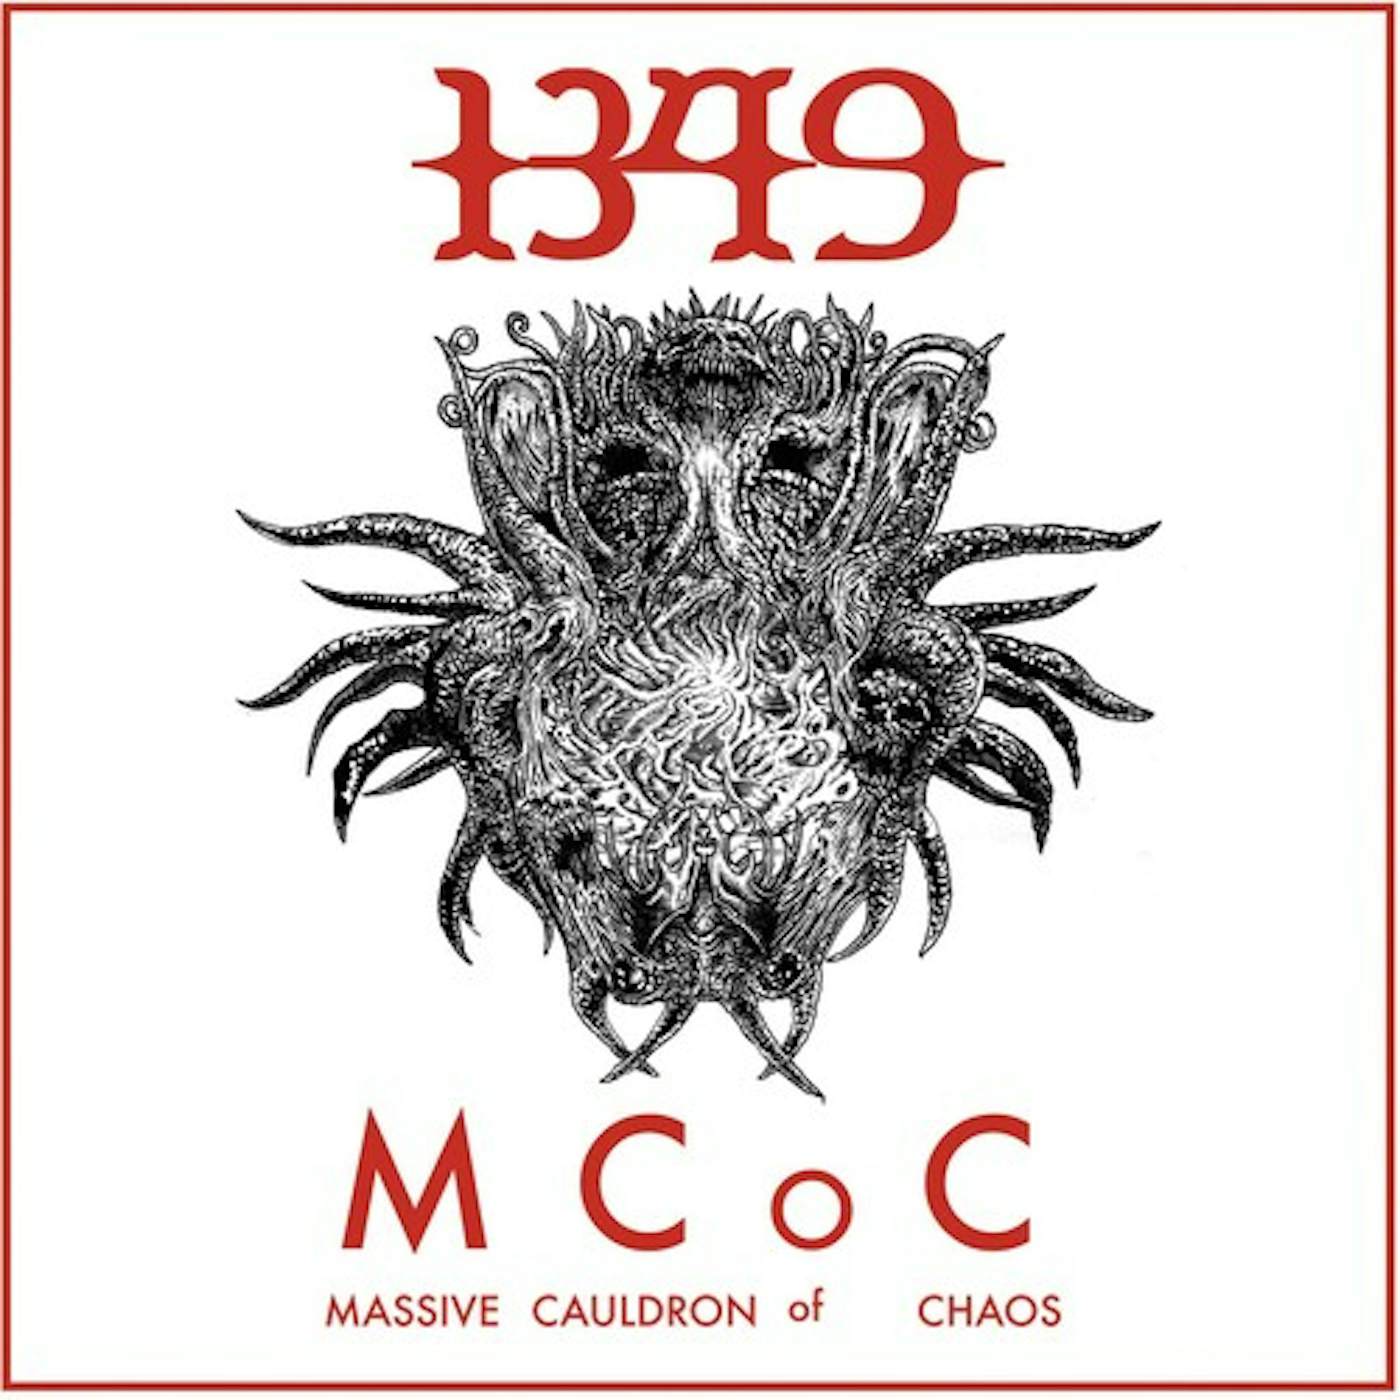 1349 Massive Cauldron of Chaos Vinyl Record